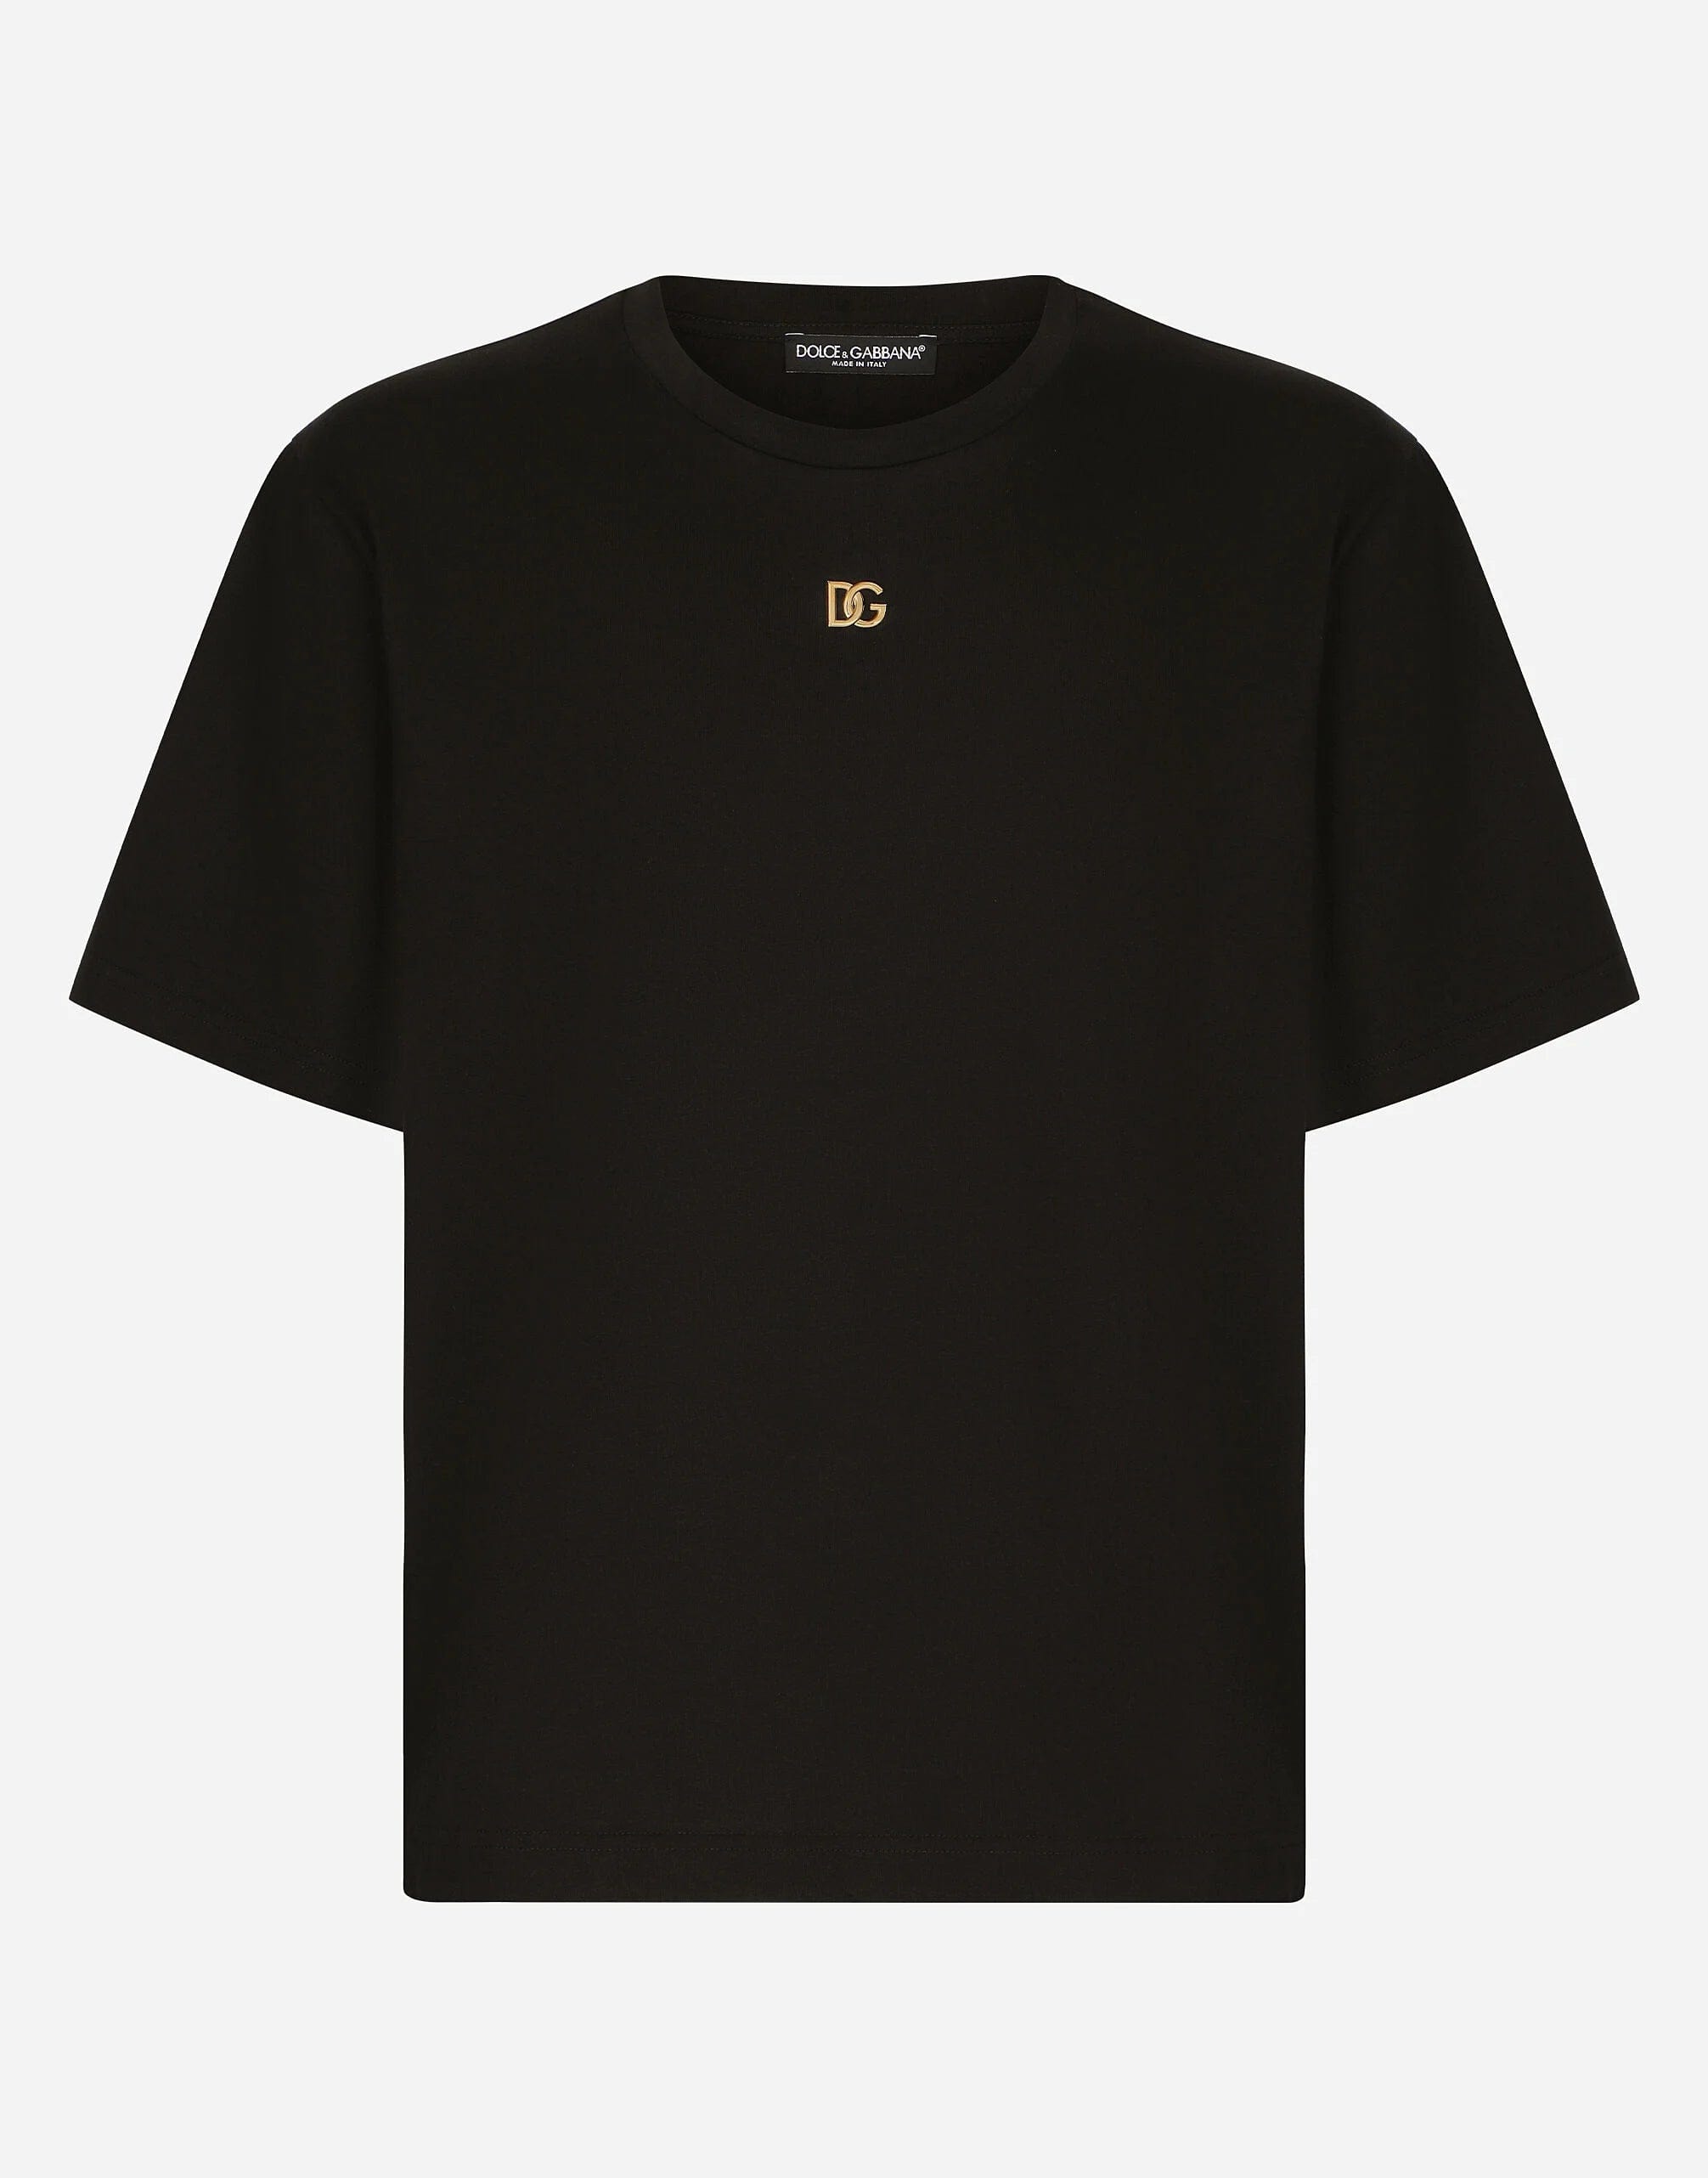 Dolce & Gabbana Cotton T-shirt With Metallic DG Logo